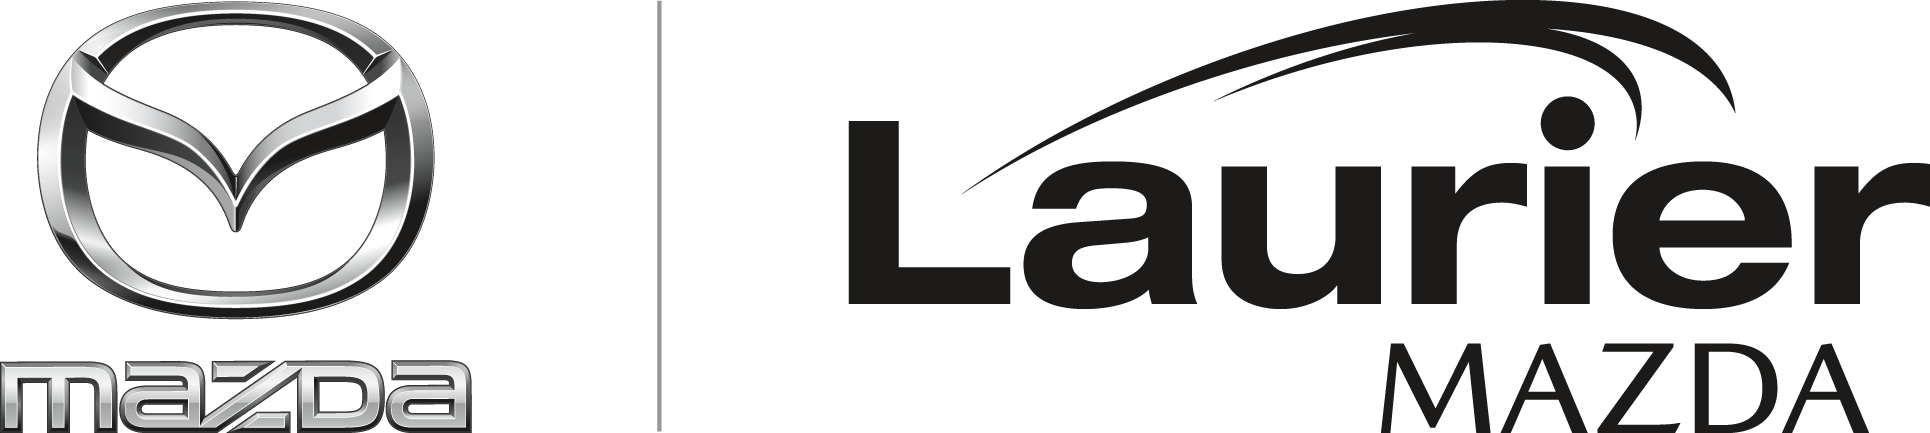 Mazda_Laurier_Logo_Alt_1_POS